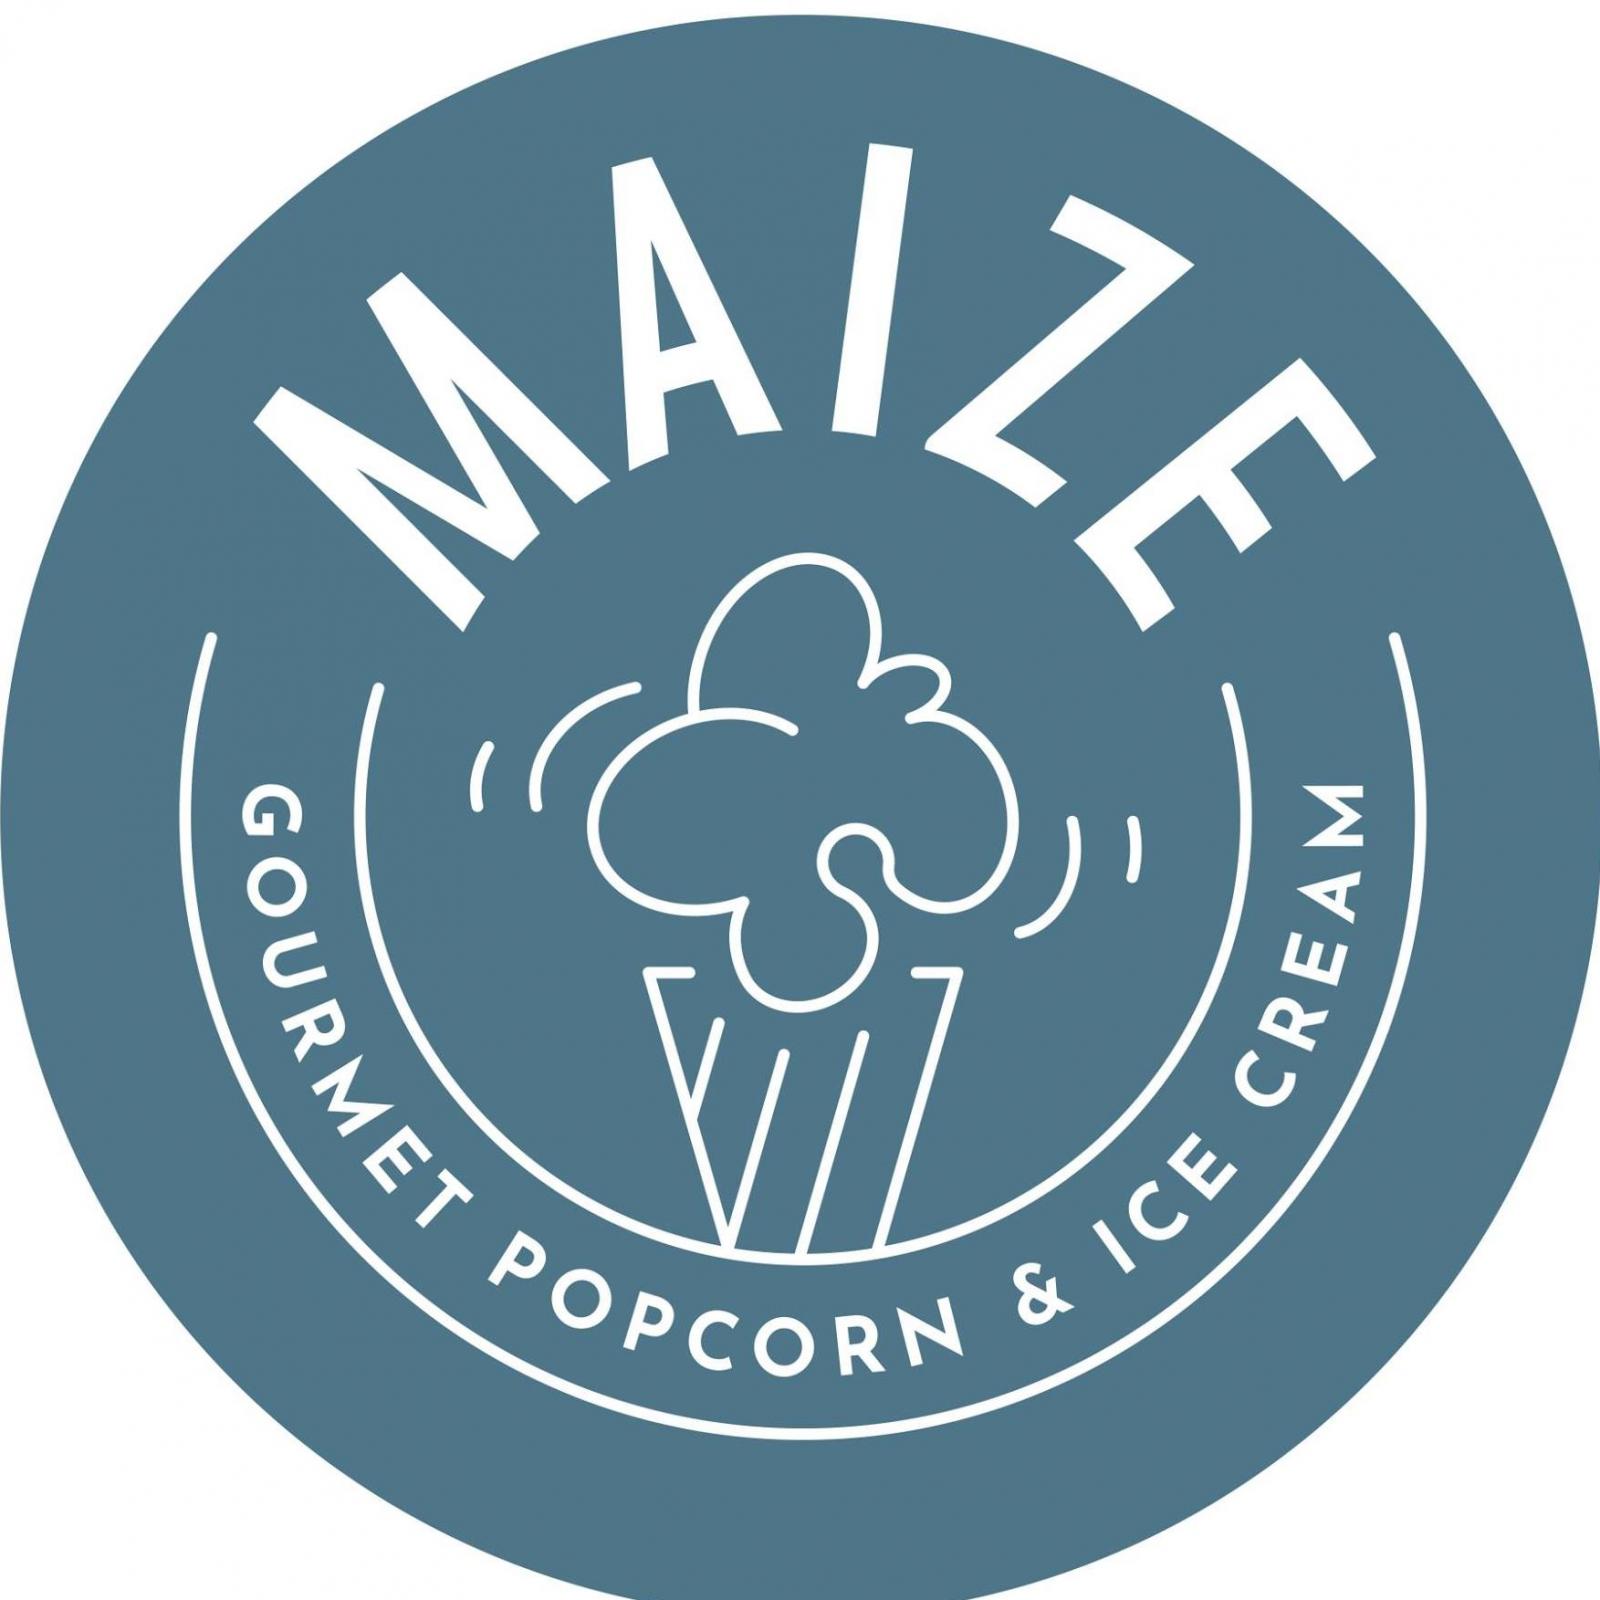 Maize Gourmet Popcorn Logo